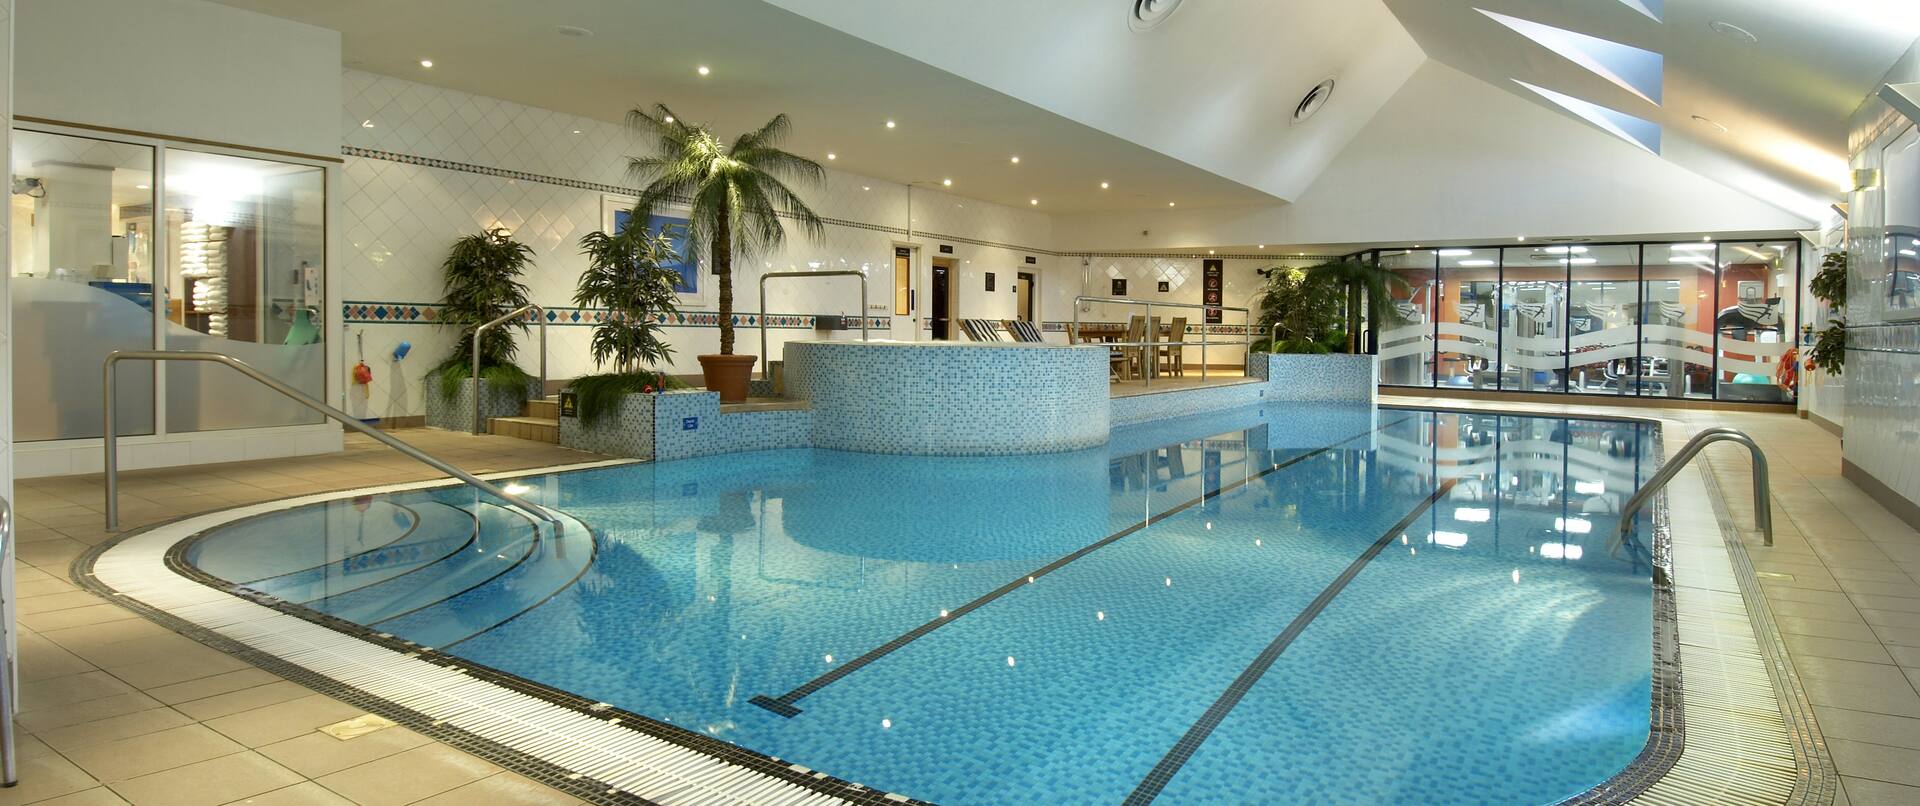 Indoor Swimming Pool 